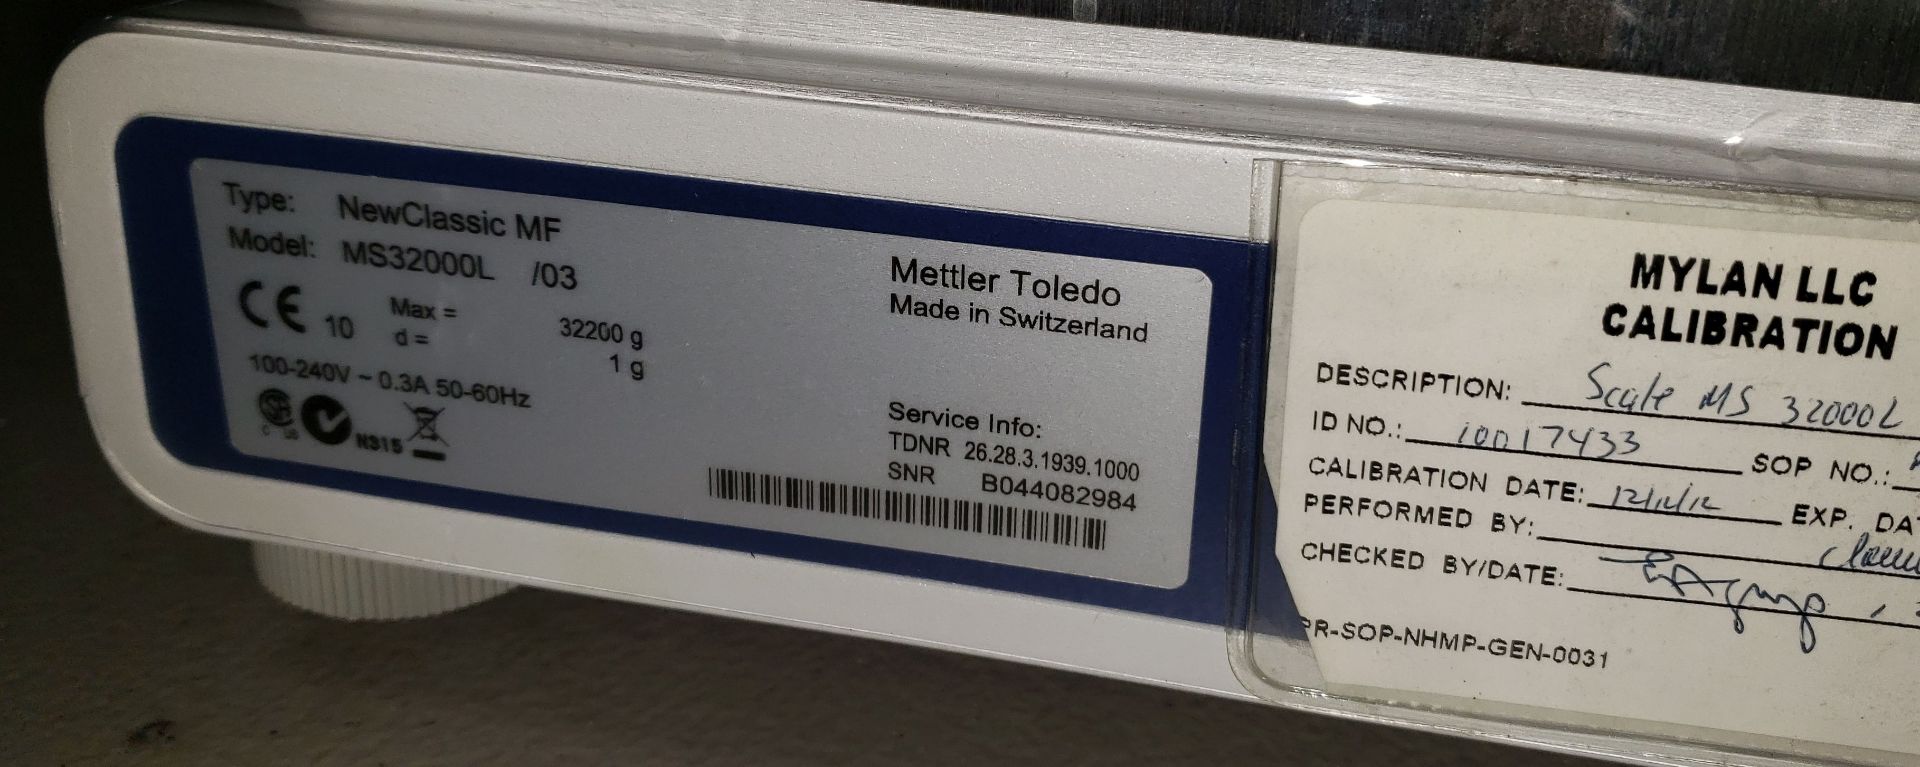 Mettler Toledo Lab Scale, model New Classic MF, model MS32000L/03, max 32,200g, d=1g, 100-240volt. - Image 4 of 6